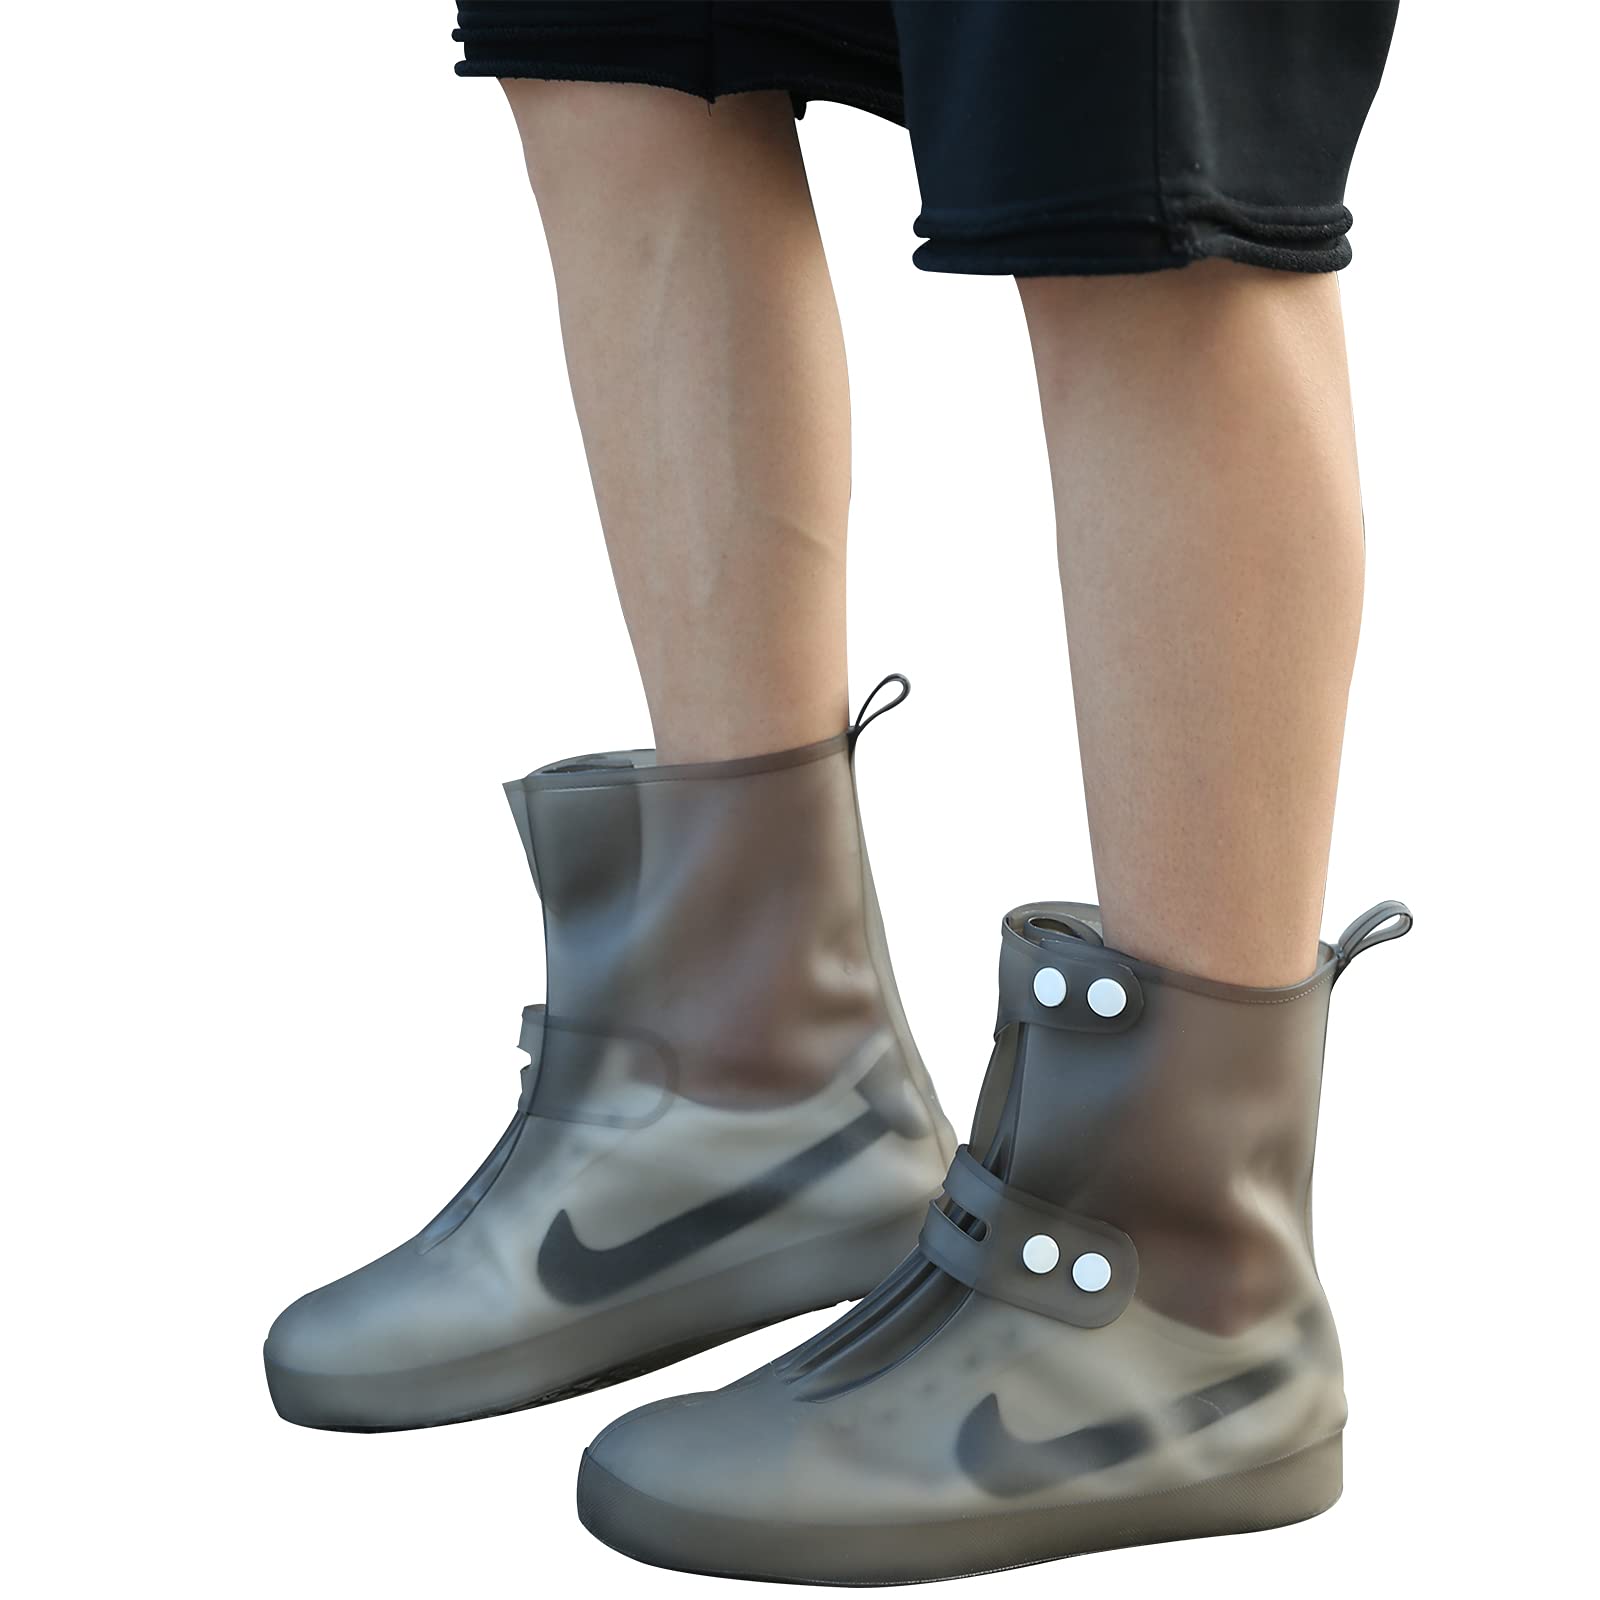 McBiuti Waterproof Rain Shoe Covers, Reusable Foldable Overshoes 